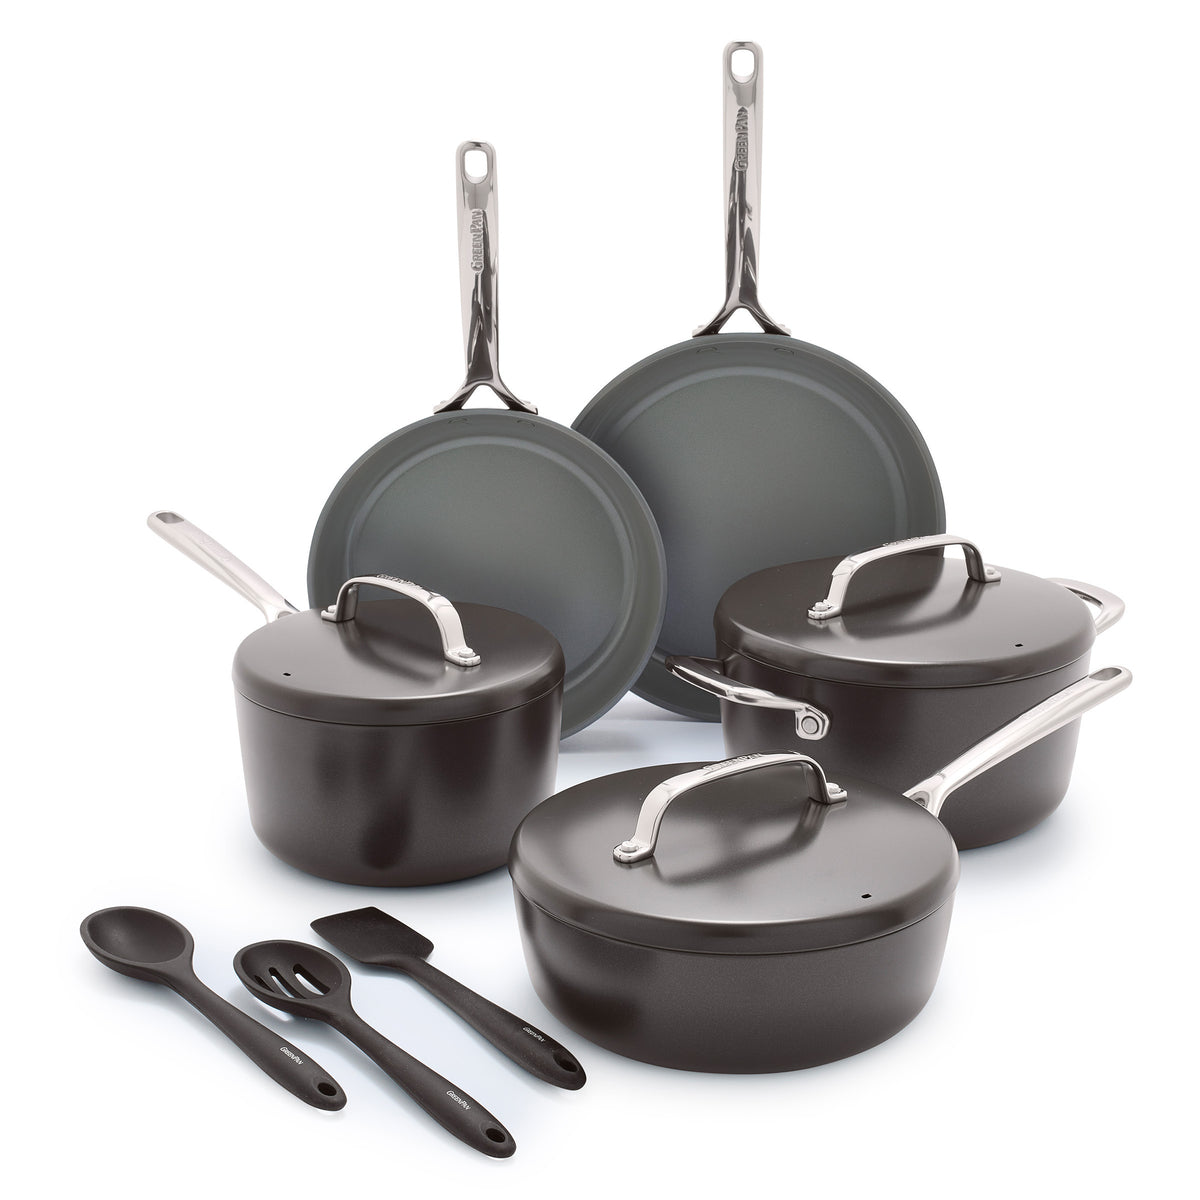 GreenPan™ Premiere Stainless-Steel Ceramic Nonstick 11-Piece Cookware Set